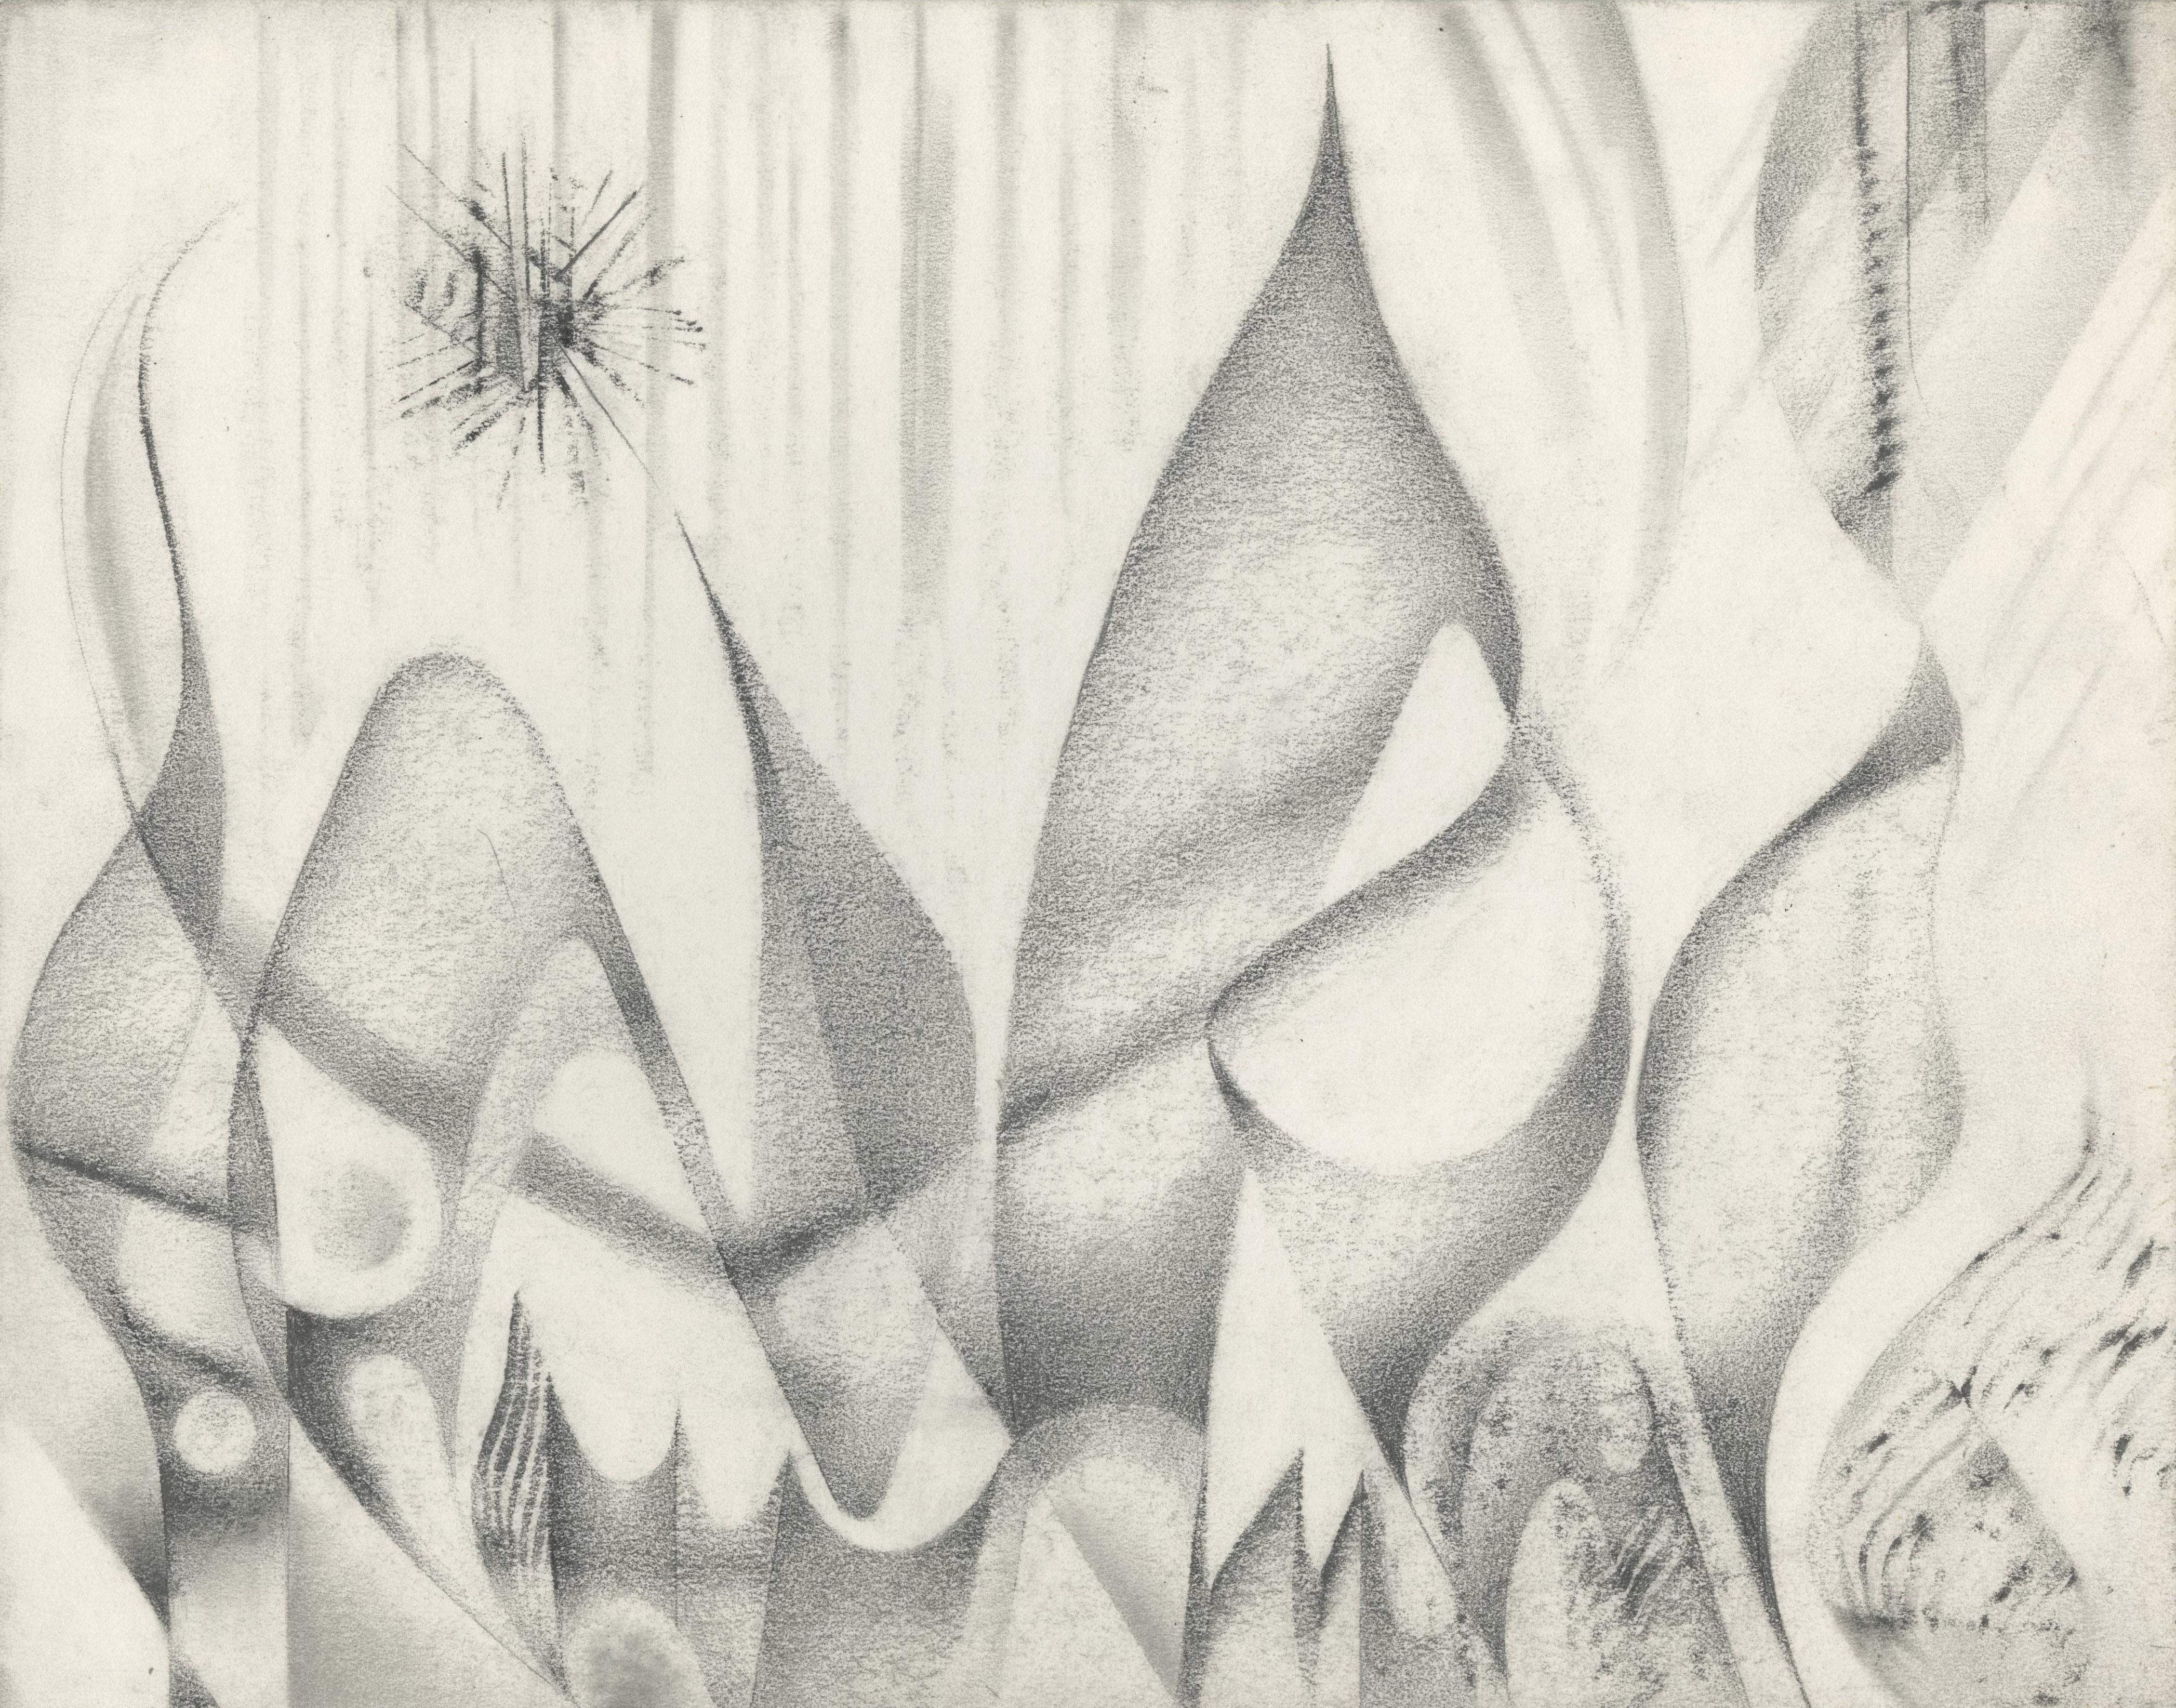 Medard P. Klein Abstract Drawing – Abstraktion ohne Titel